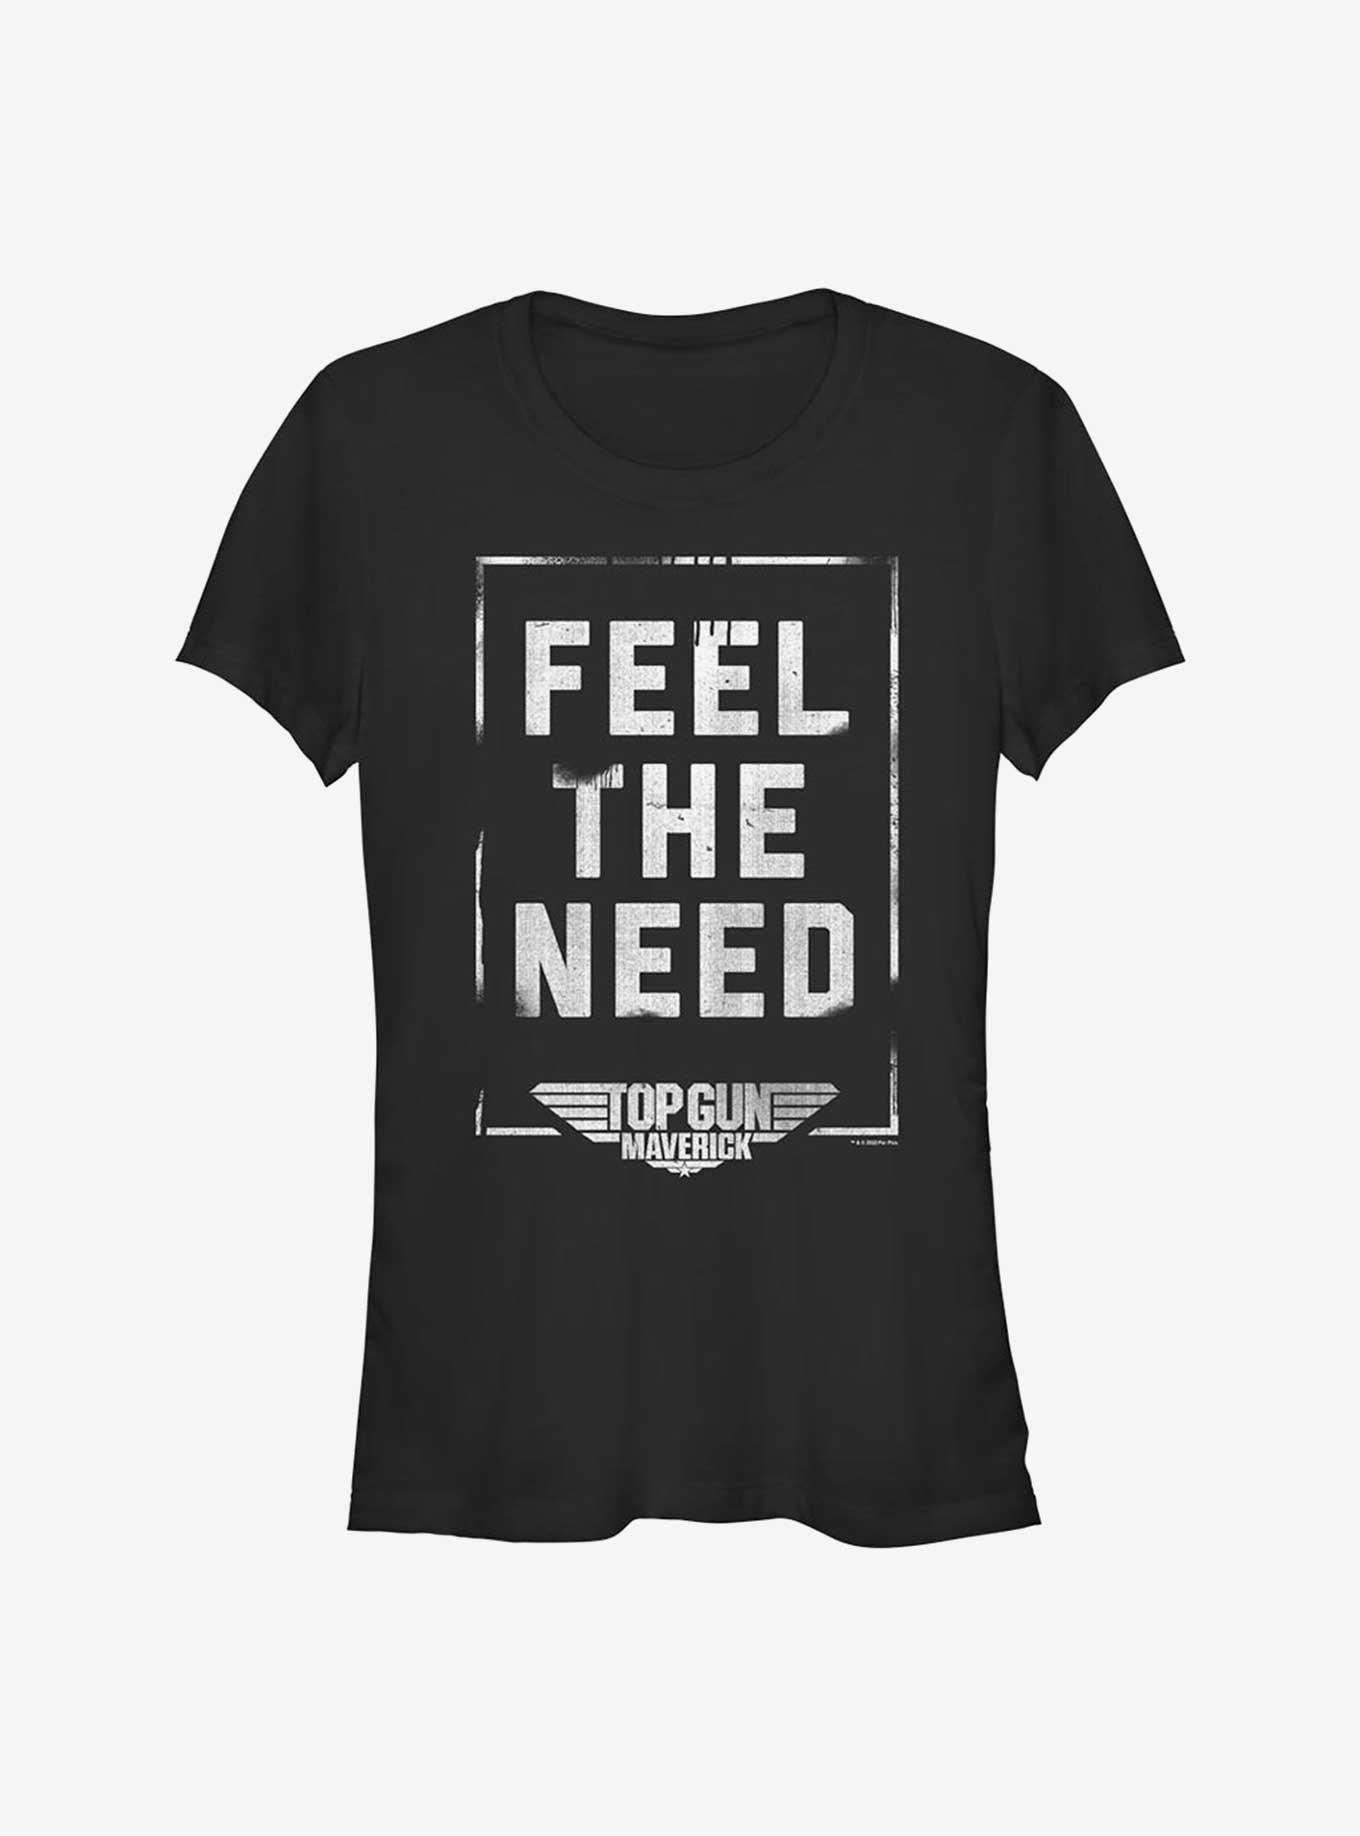 Top Gun Maverick Feel The Need Girls T-Shirt, BLACK, hi-res